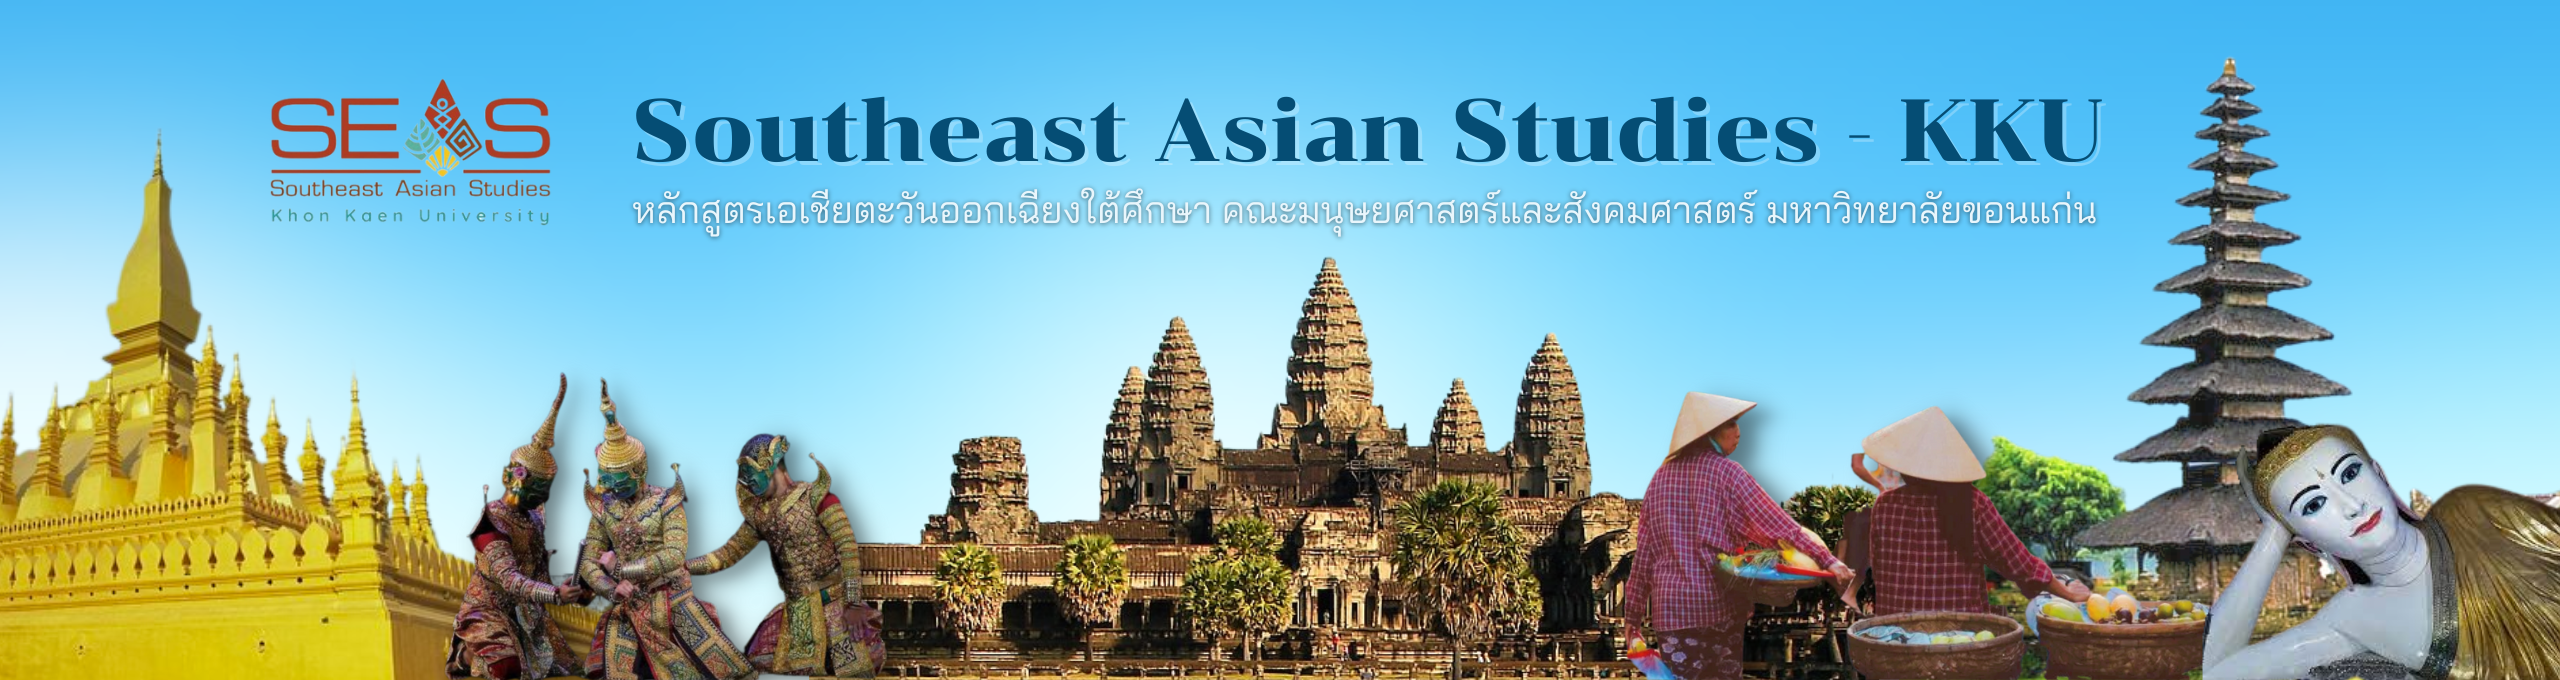 Southeast Asian Studies - KKU